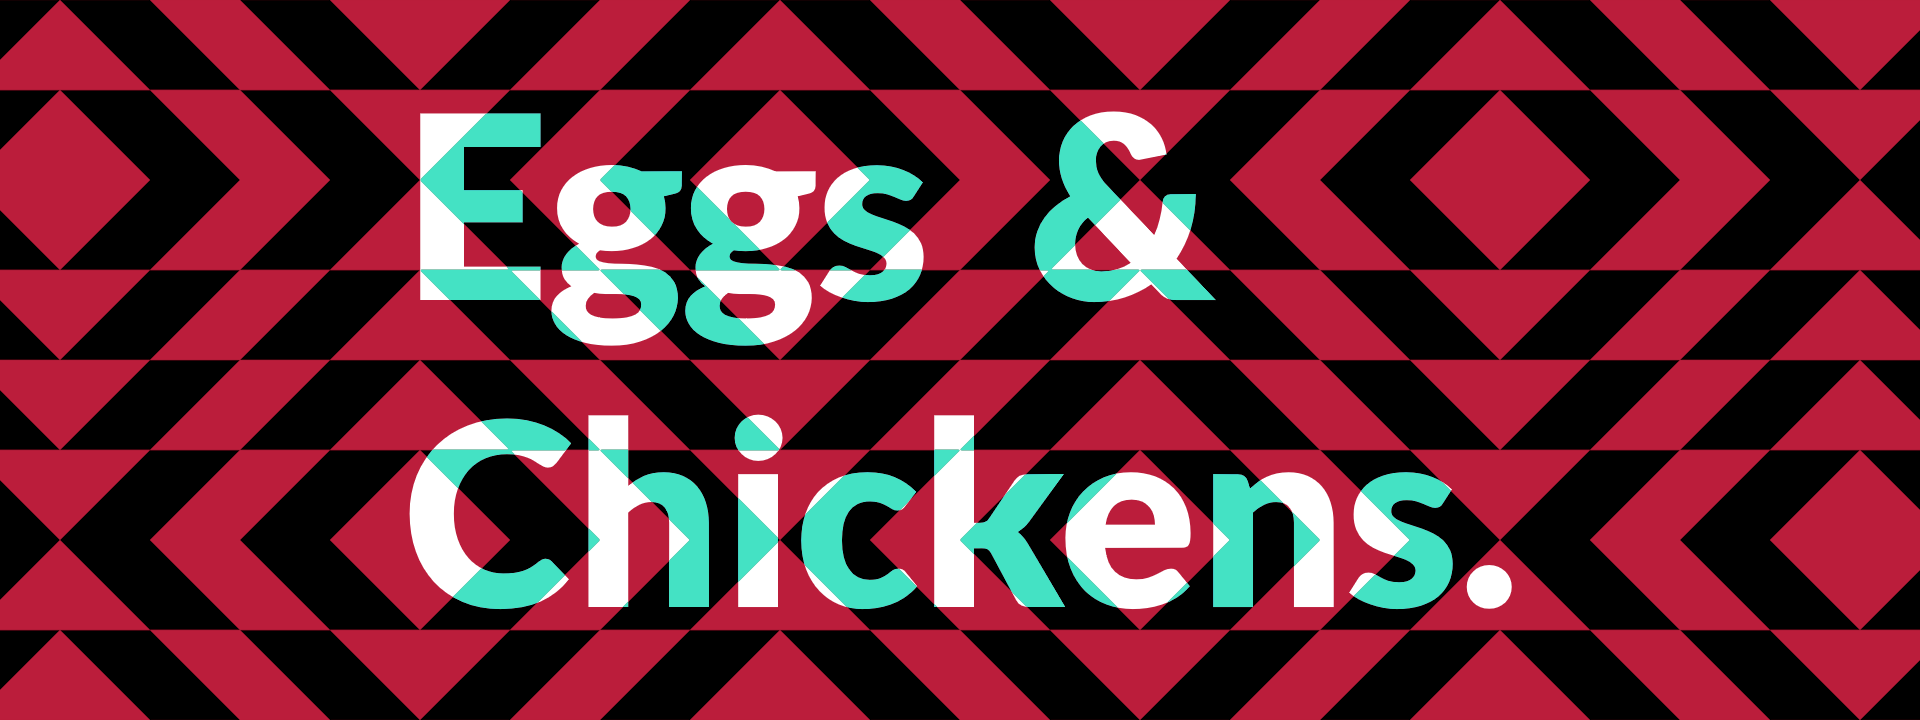 Artsy Eggs & Chickens